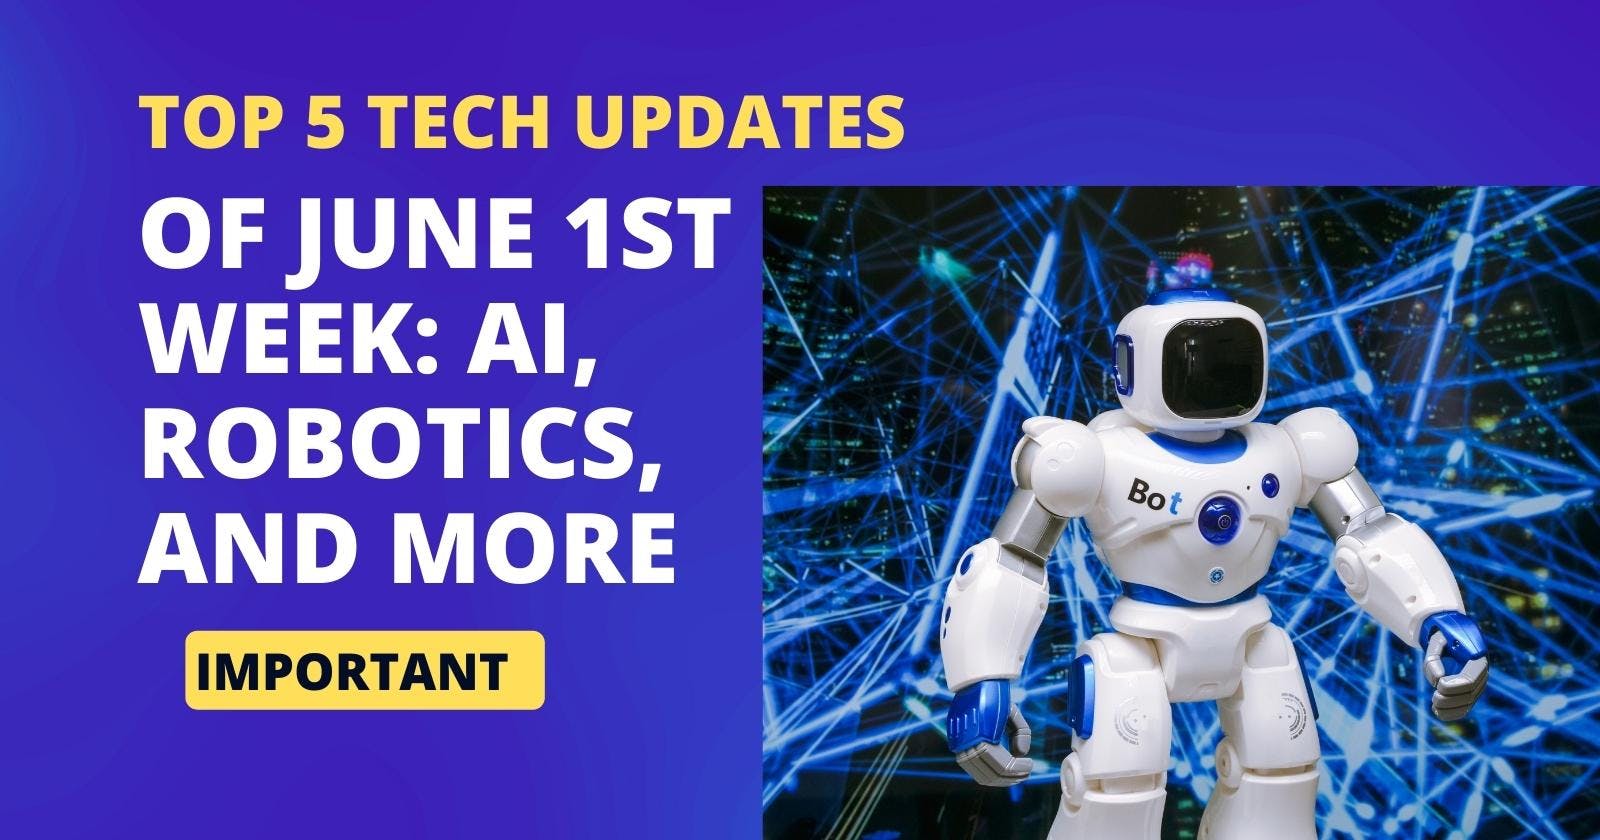 Top 5 Tech Updates of June 1st Week: AI, Robotics, and More